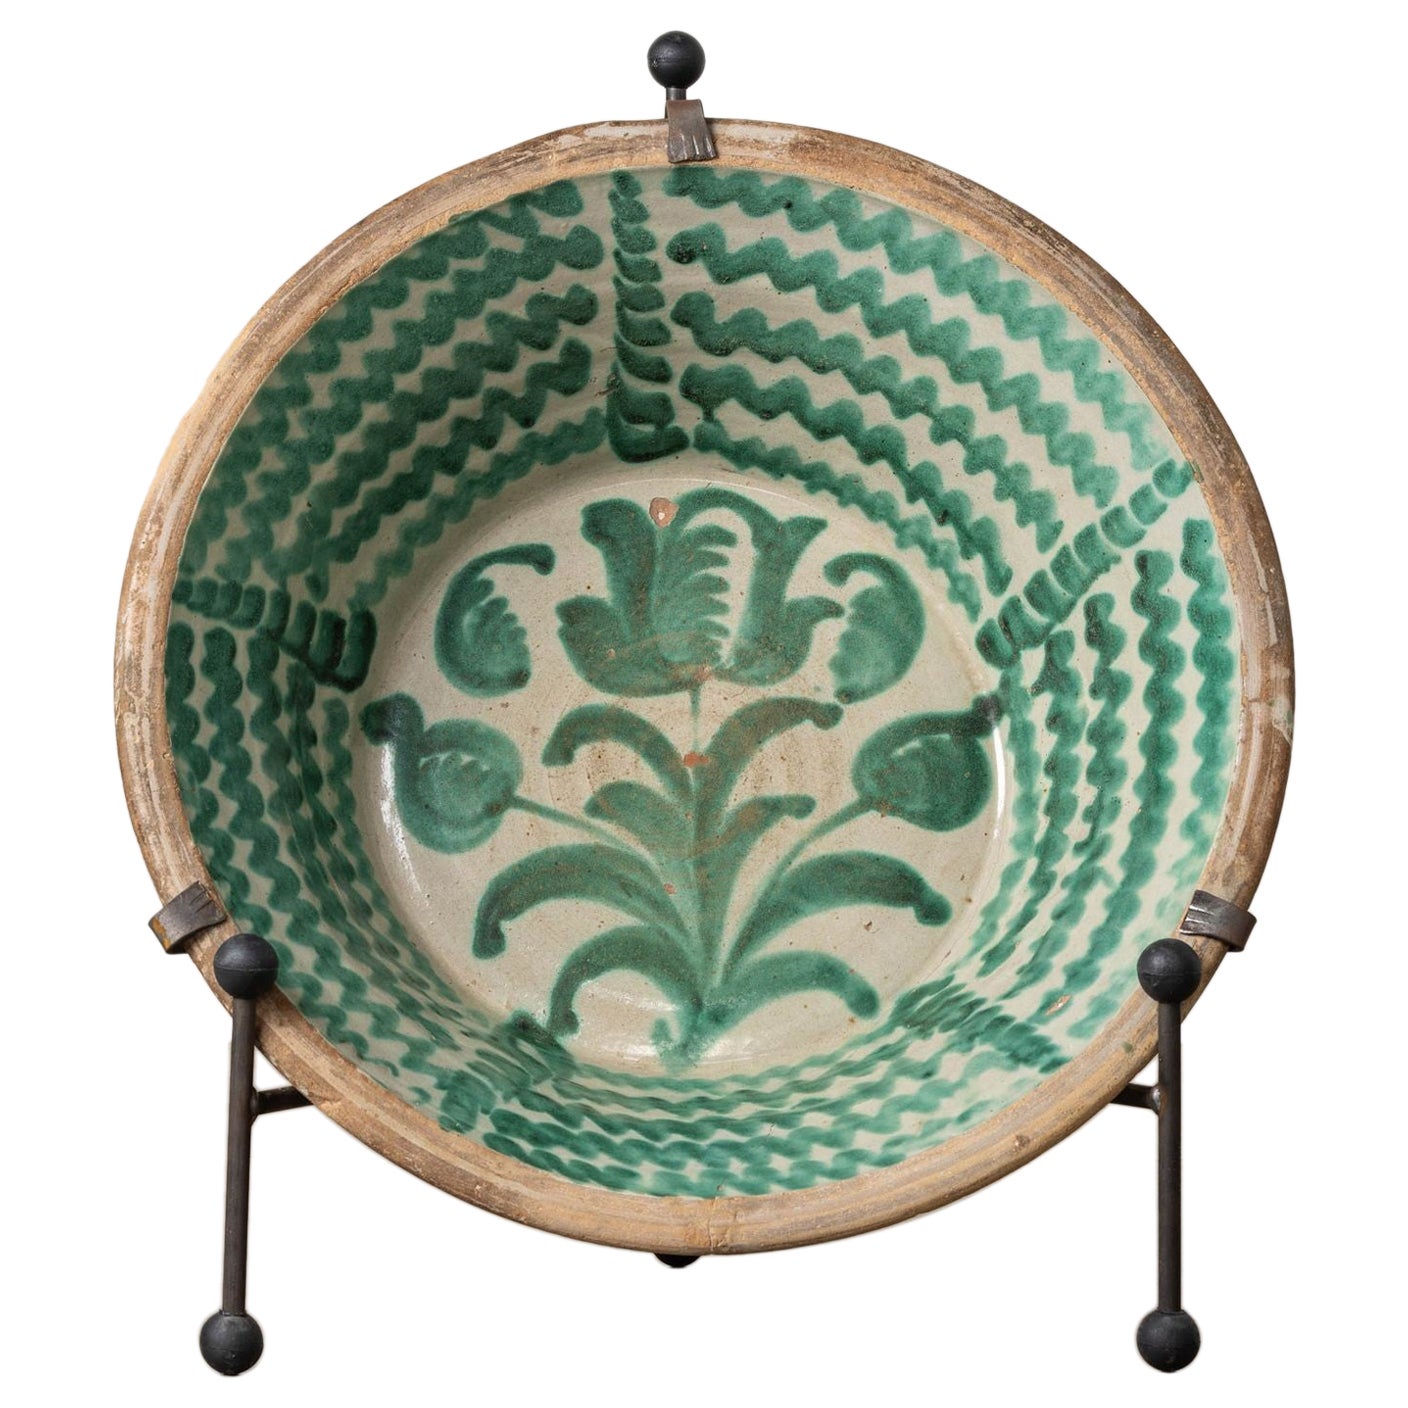 19th c. Large Spanish Green Fajalauza Lebrillo Bowl from Granada